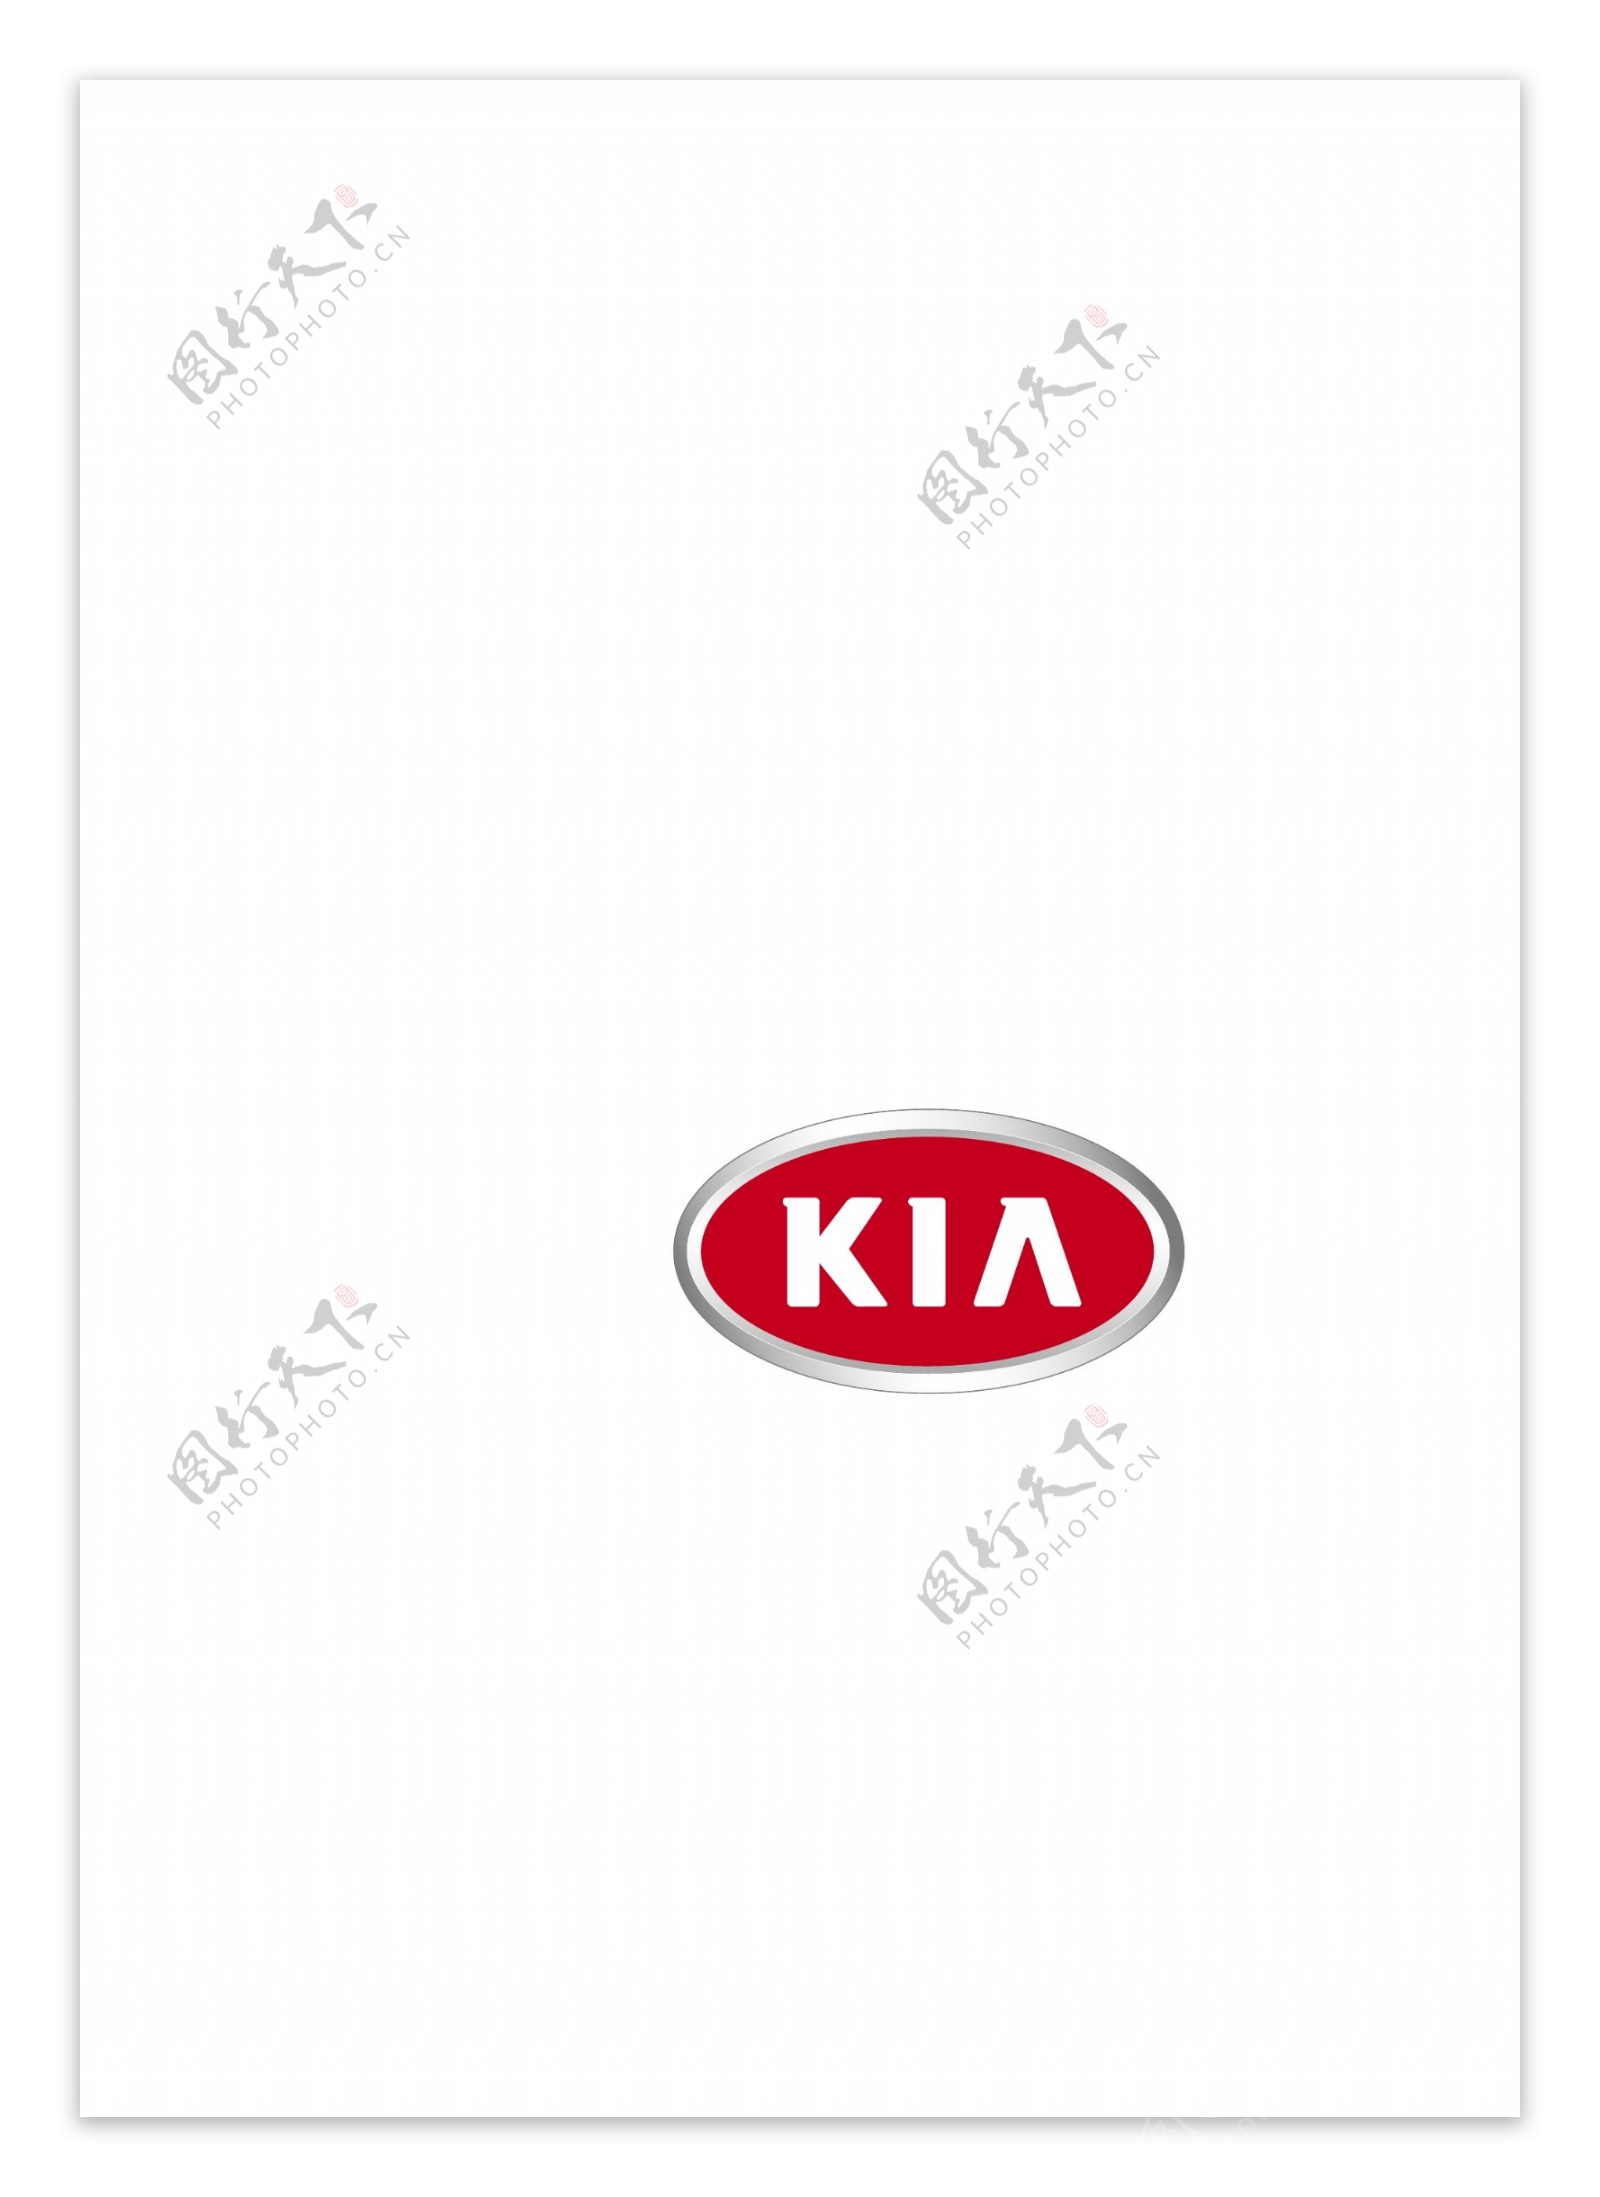 Kialogo设计欣赏Kia汽车logo大全下载标志设计欣赏